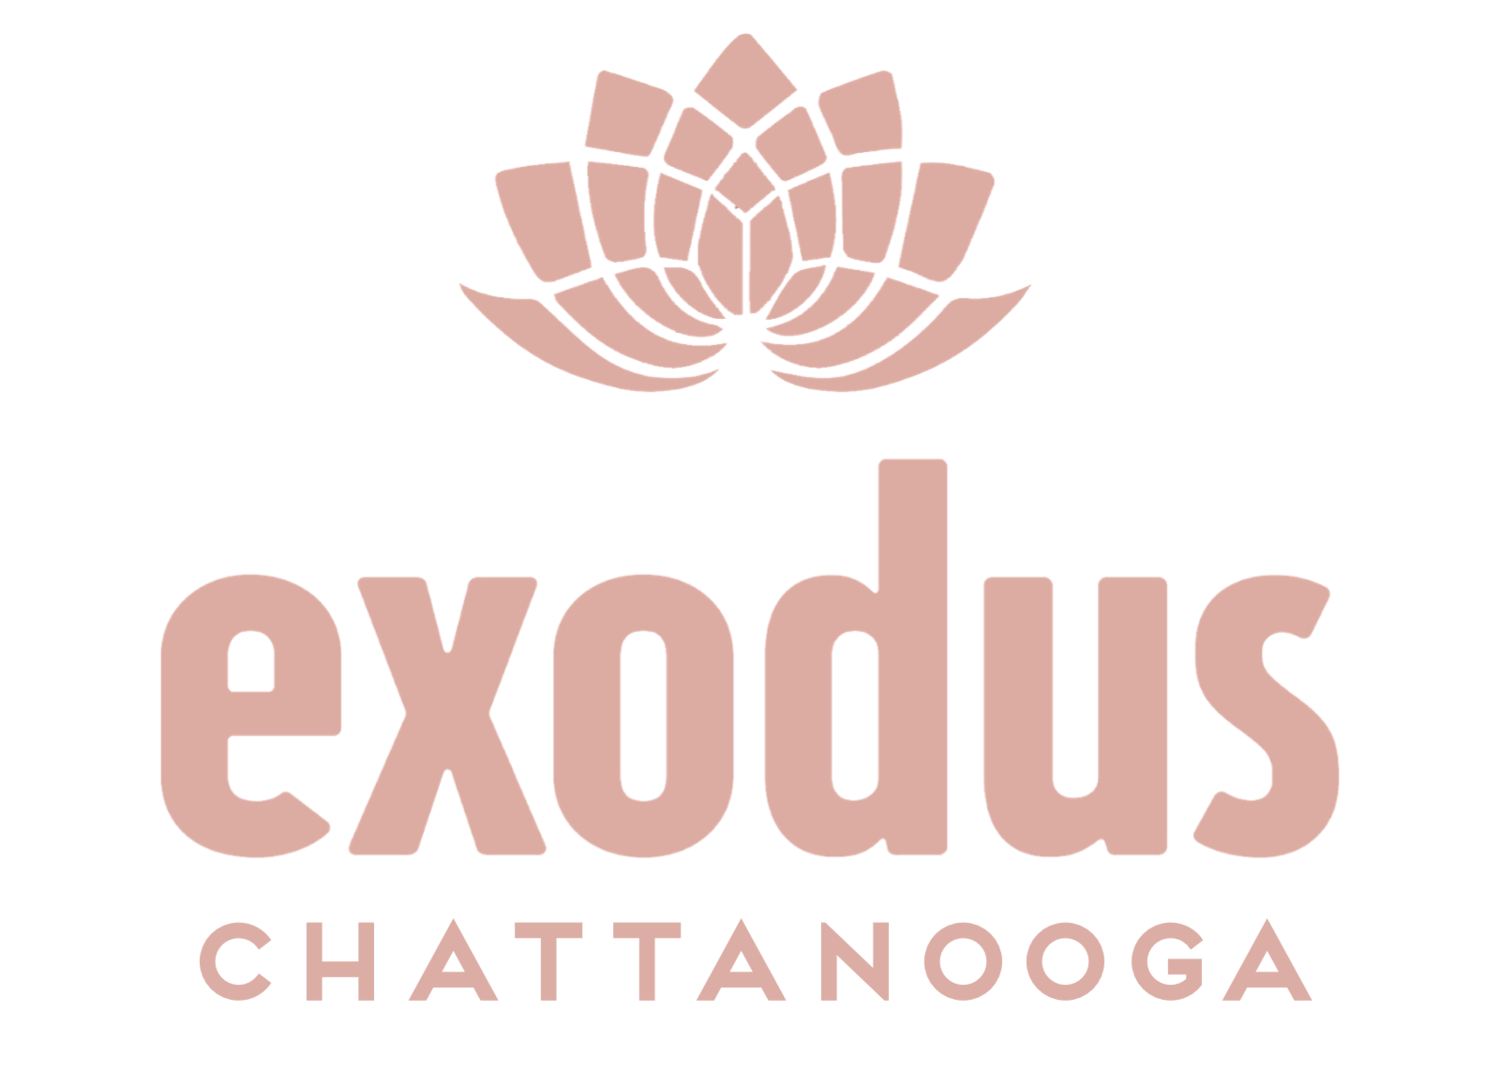 Exodus Chattanooga